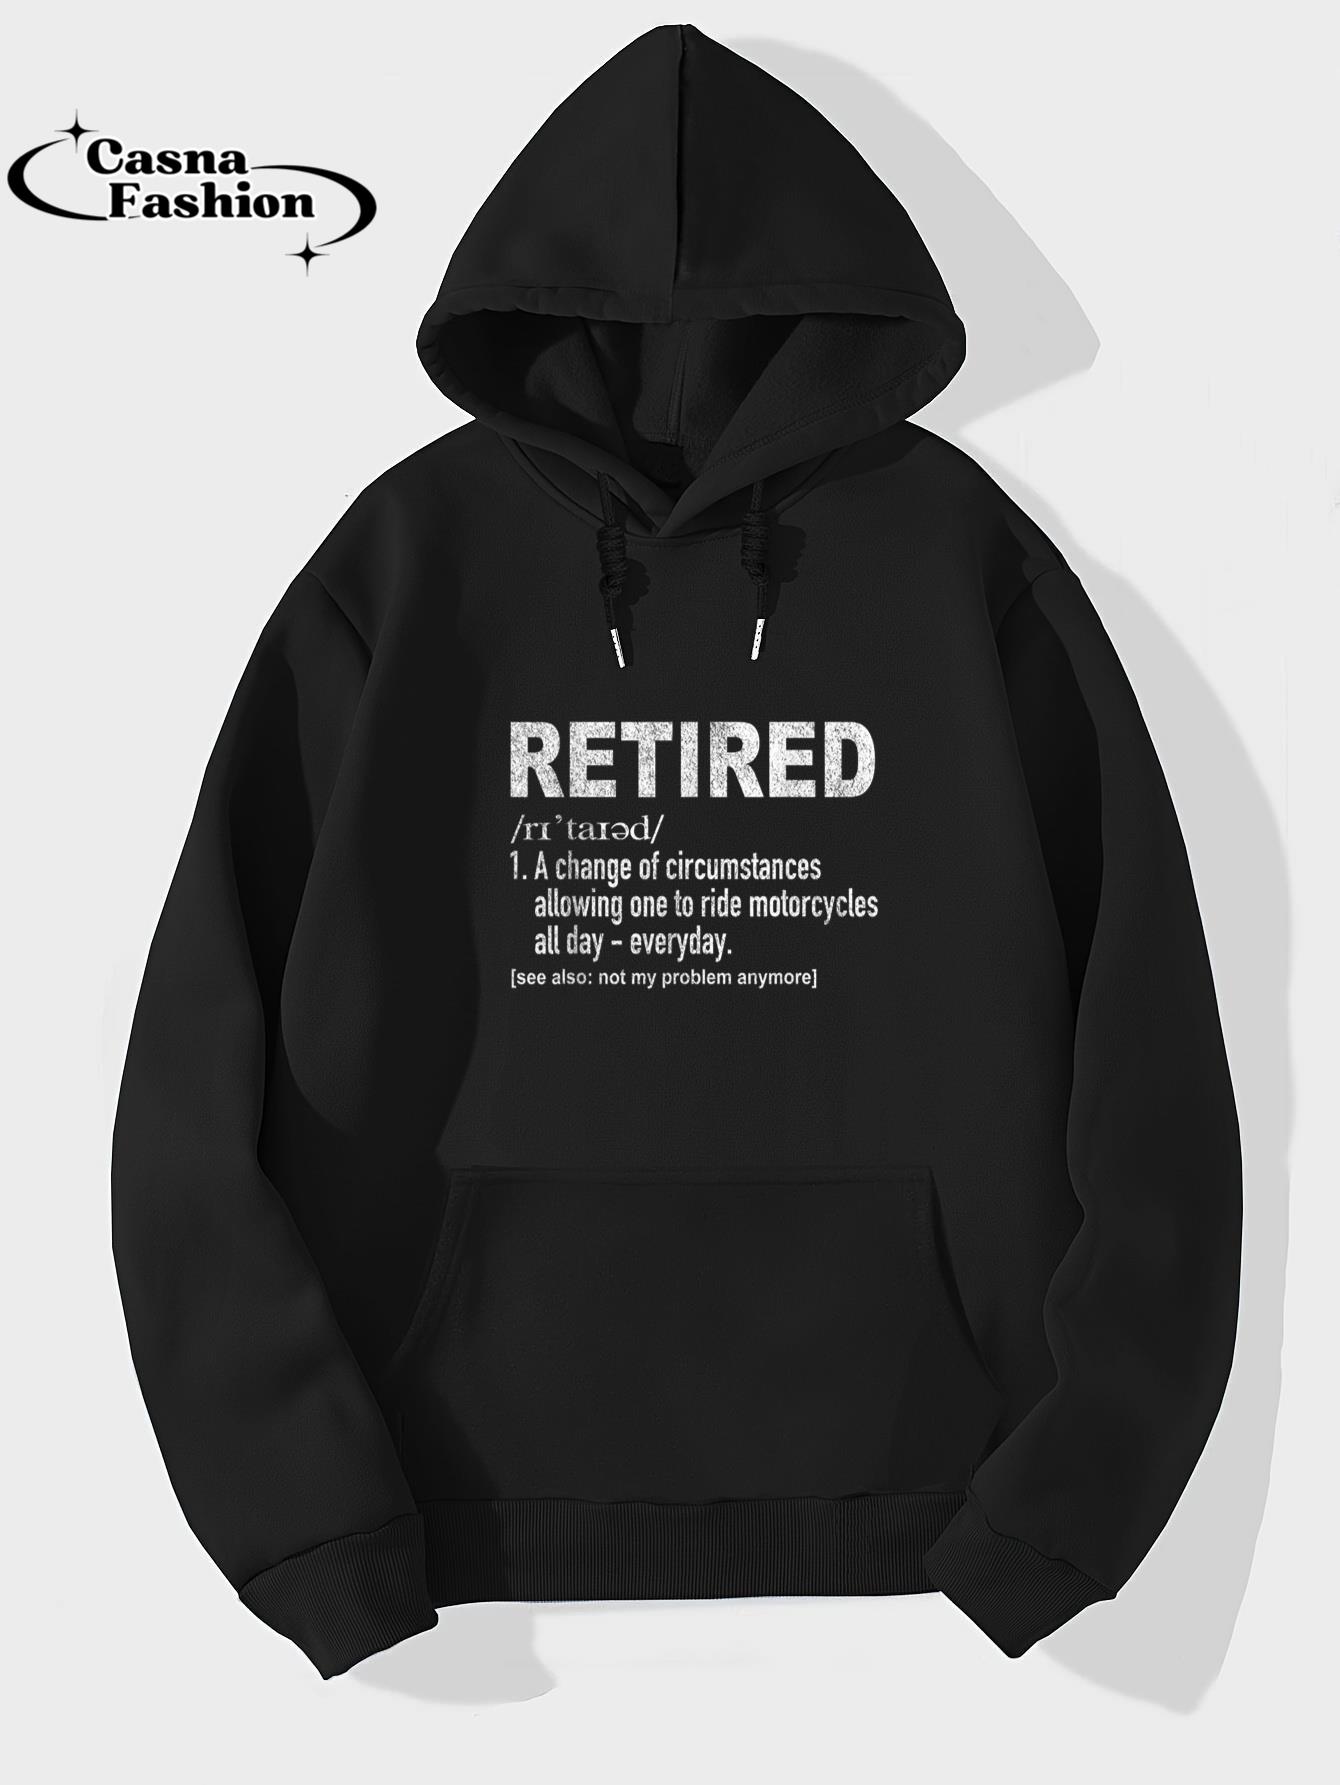 casnafashion_Hoodie_Retired Definition Motorcycle Retirement Plan Biker Retro T-Shirt_hoodie_black hoodie